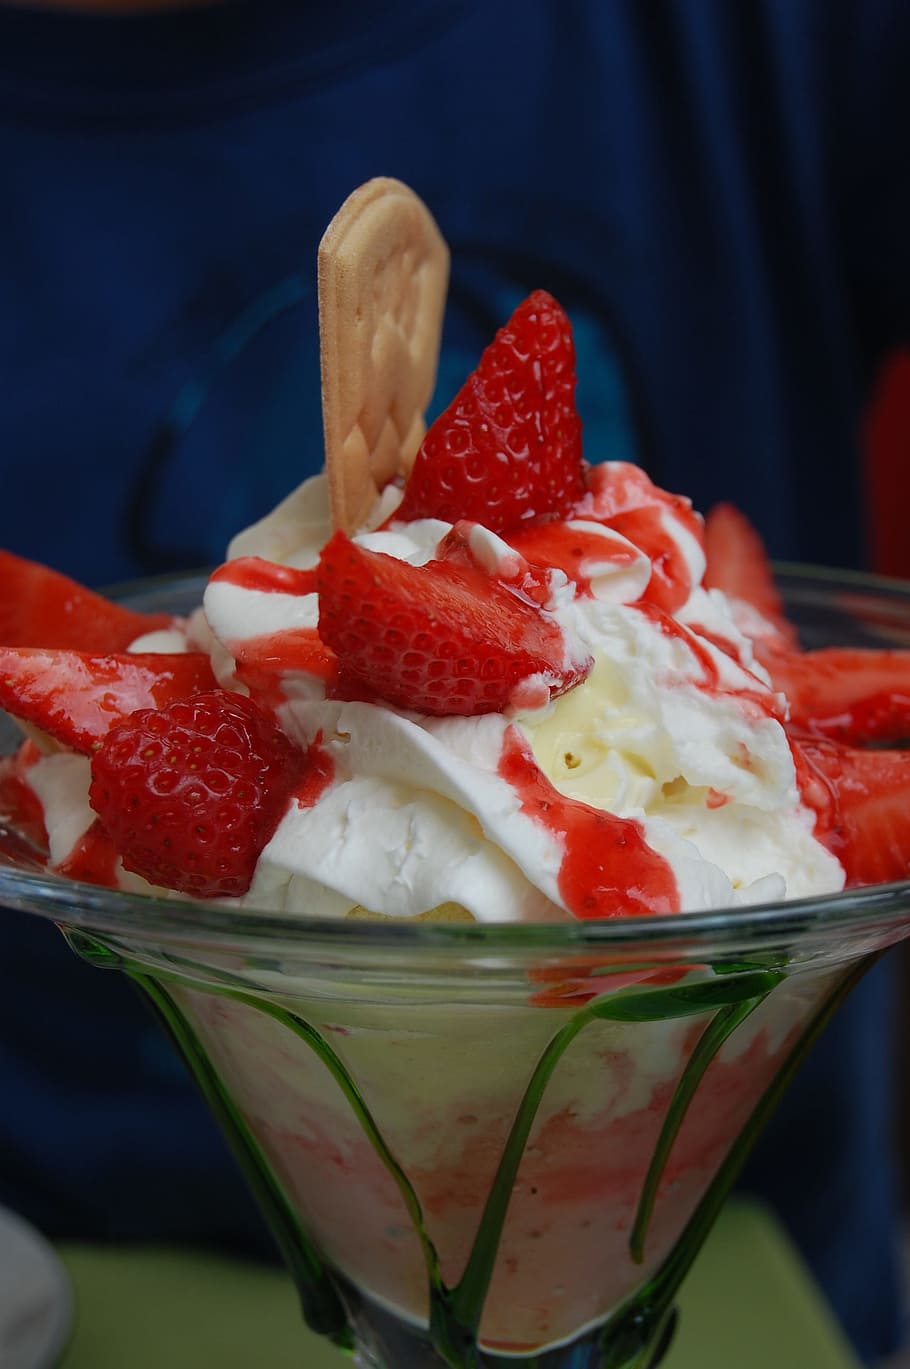 ice cream sundae, ice, ice cream, strawberry, ice cream parlour, eat, vanilla ice cream, red, strawberries, cream